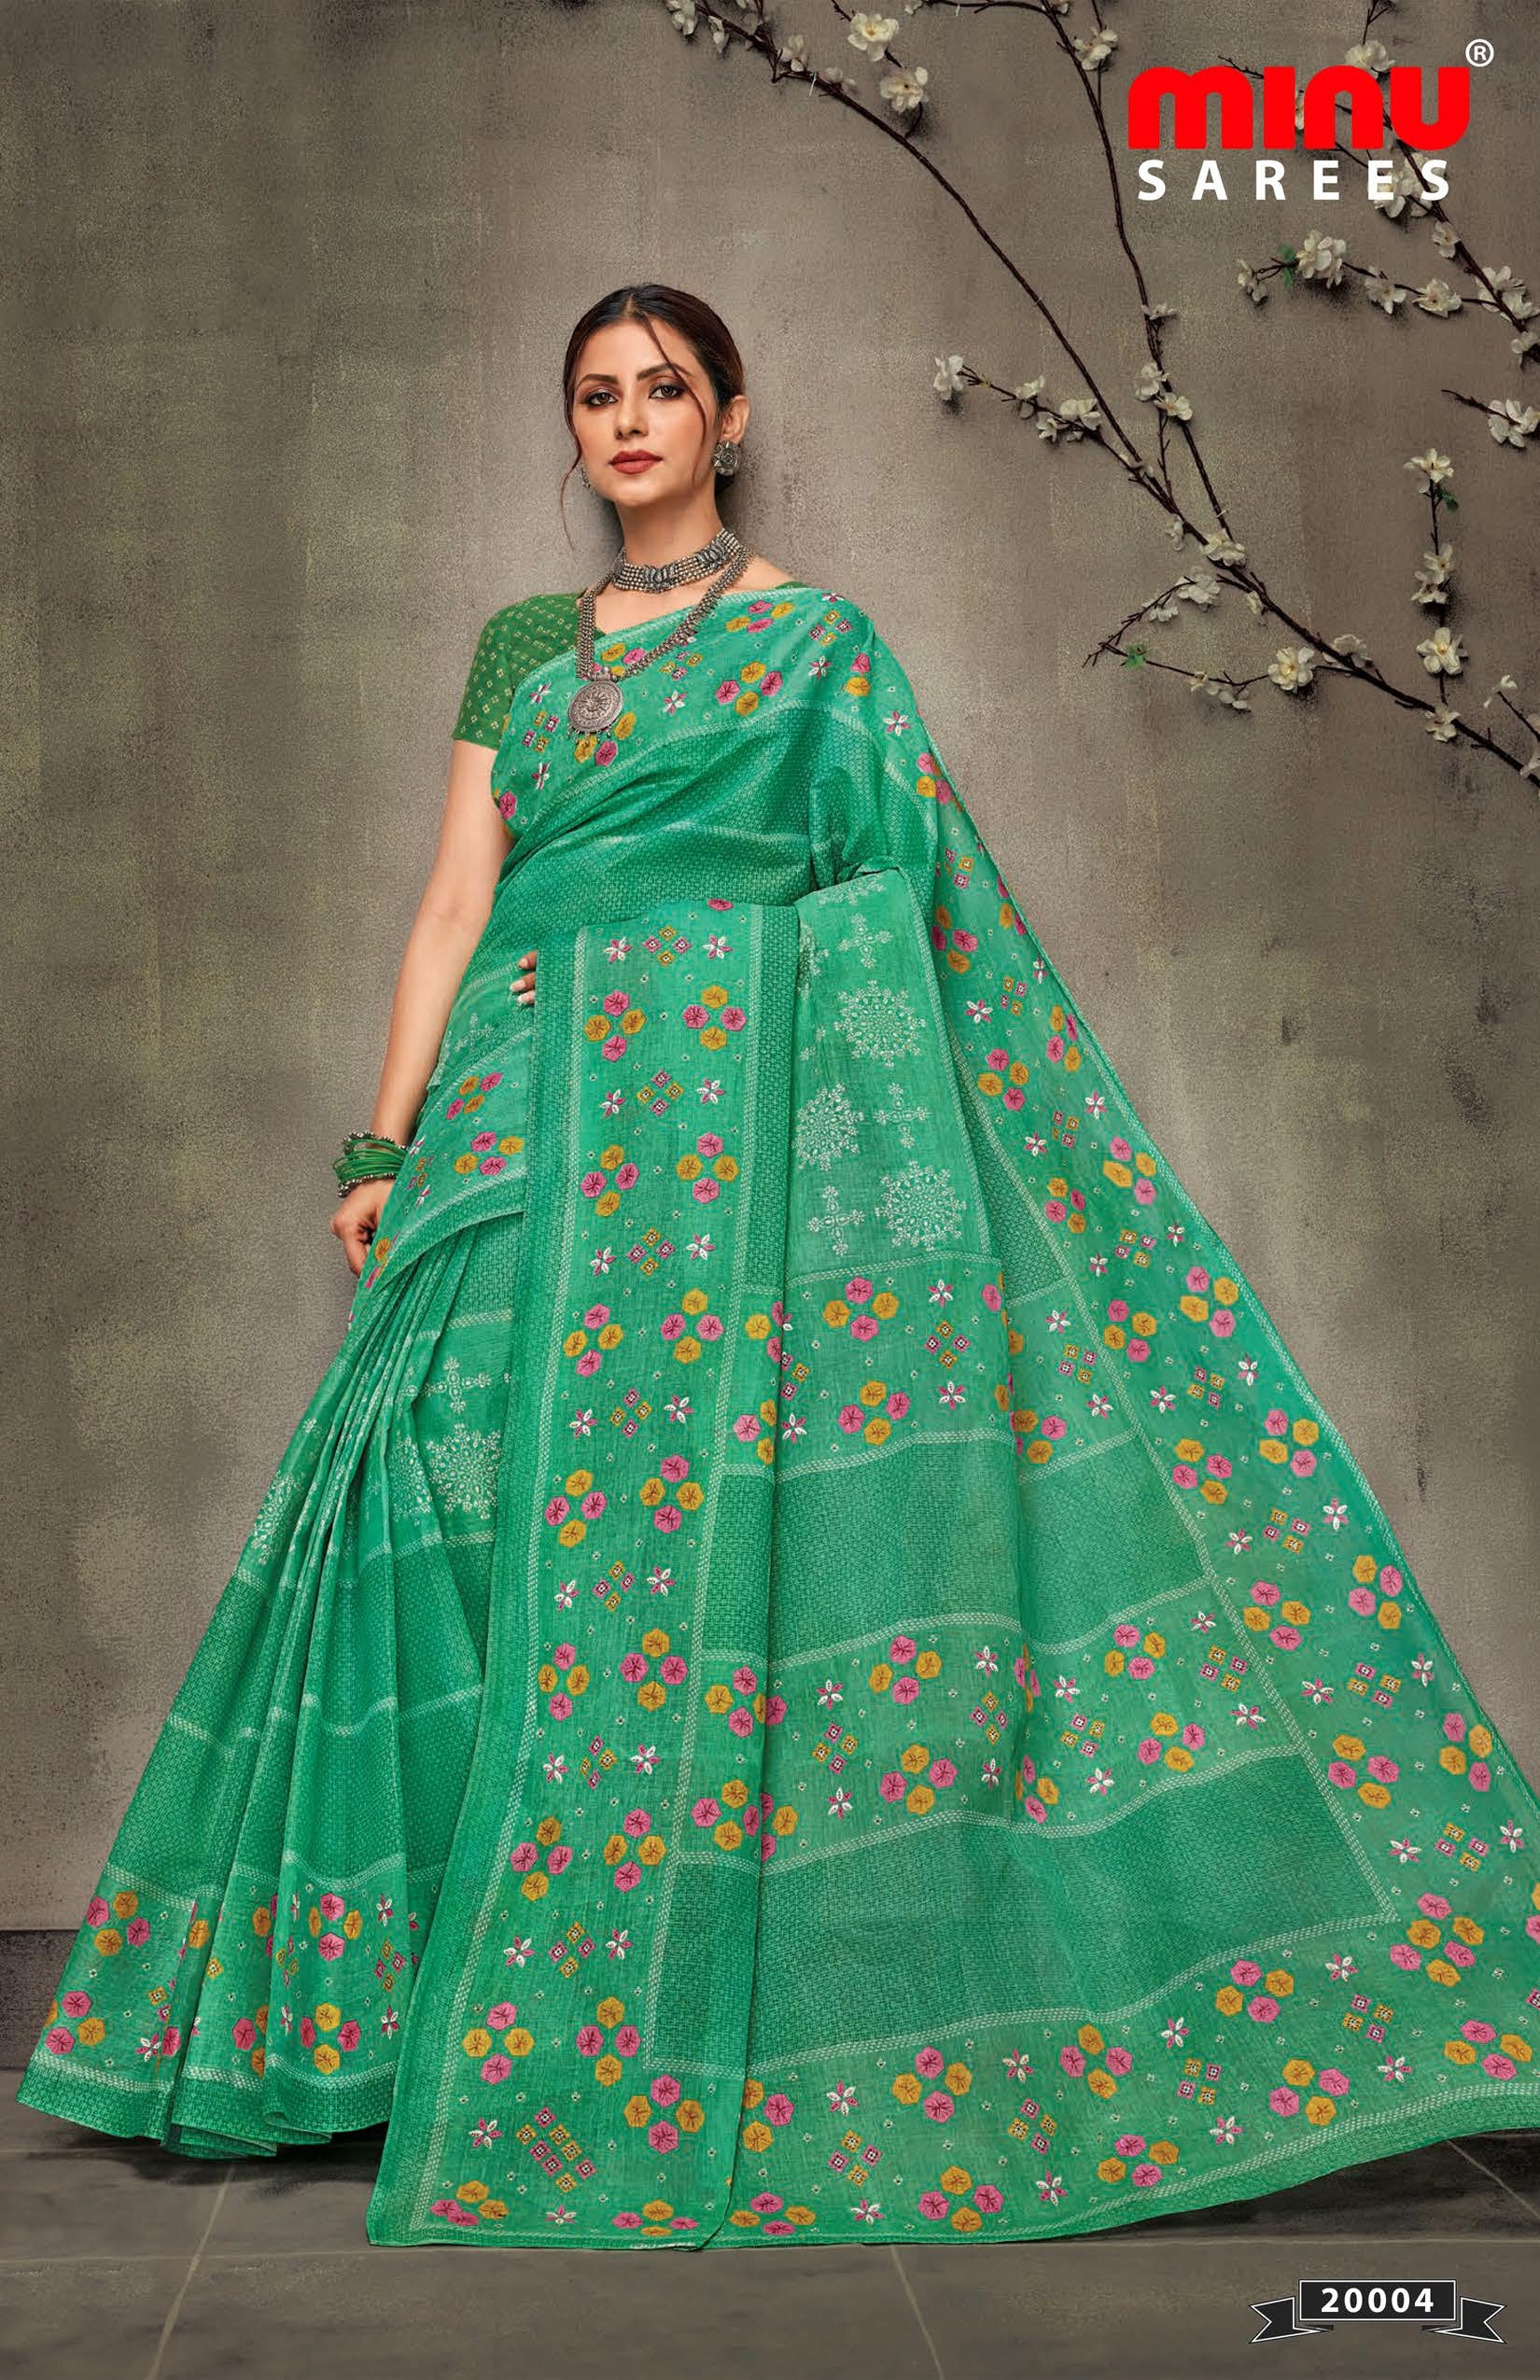 Woman wearing best designer green printed saree